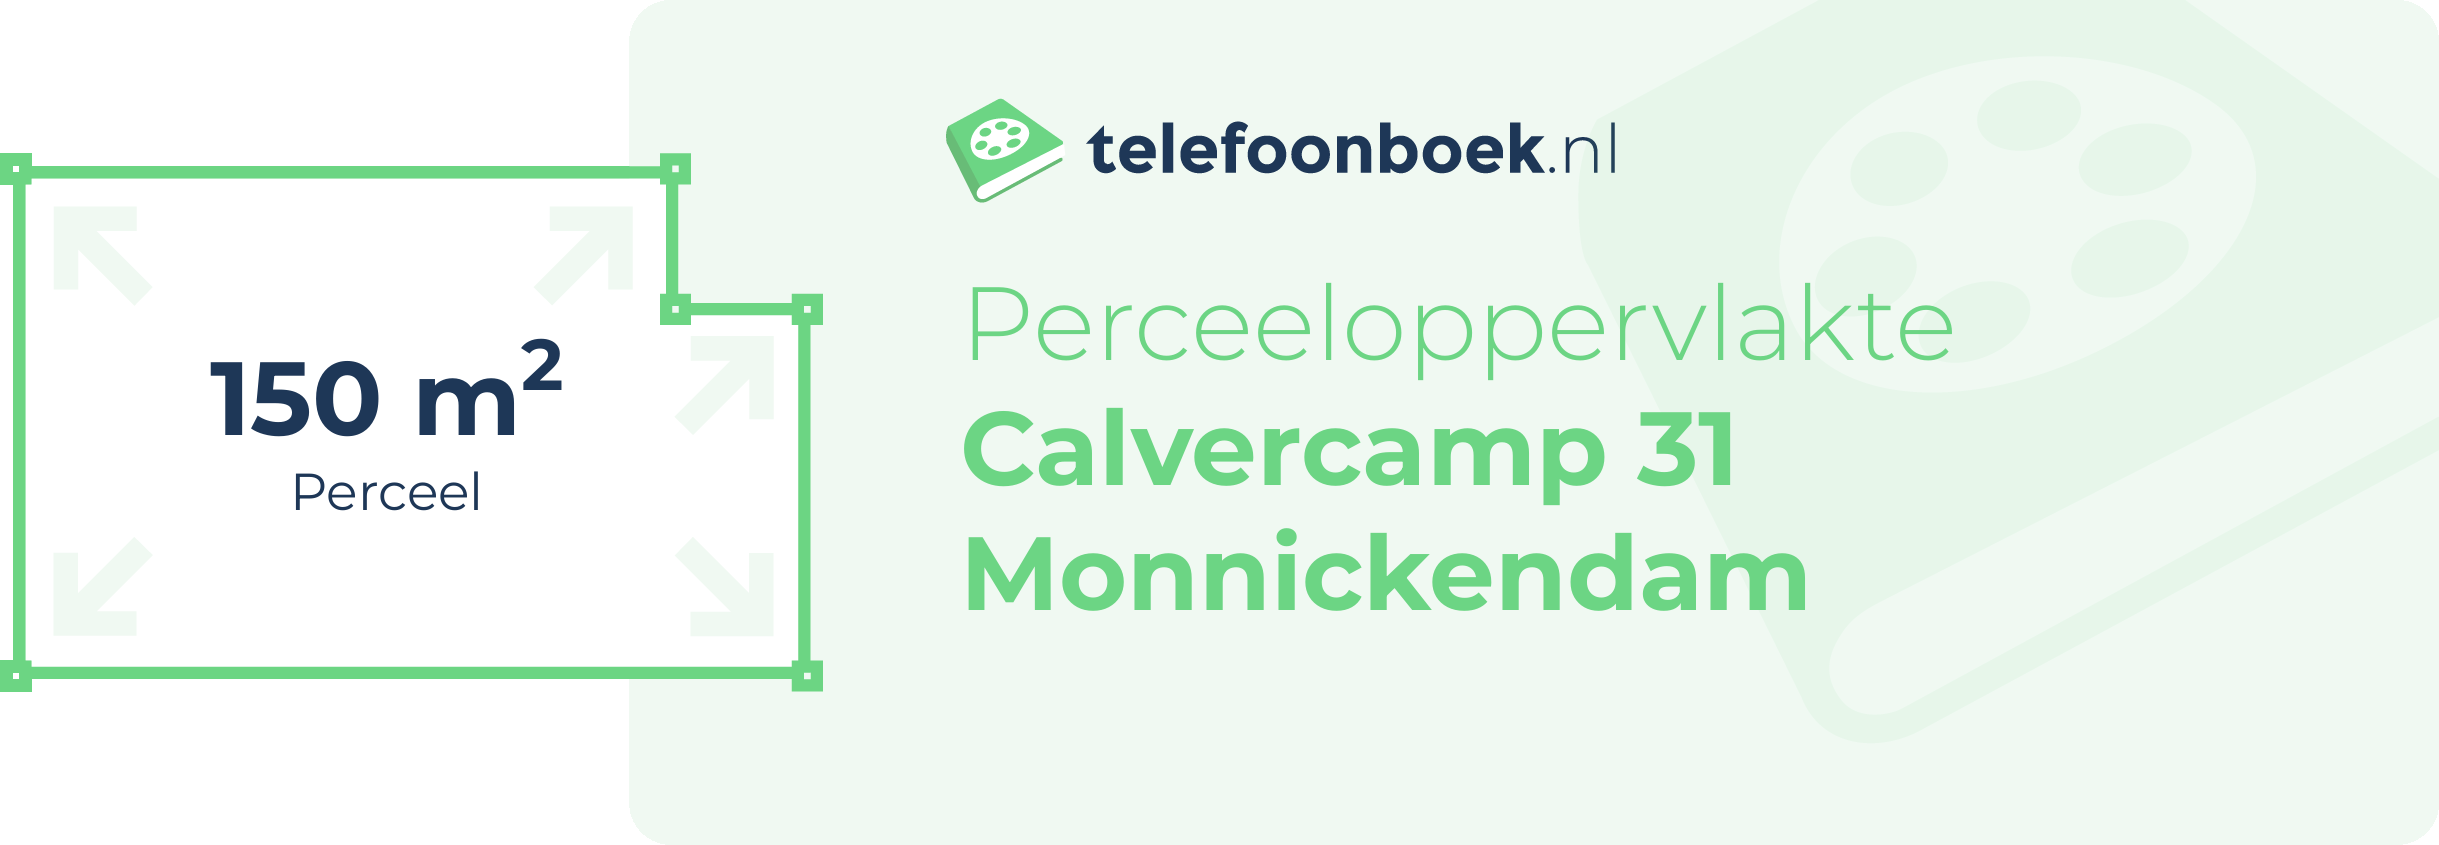 Perceeloppervlakte Calvercamp 31 Monnickendam